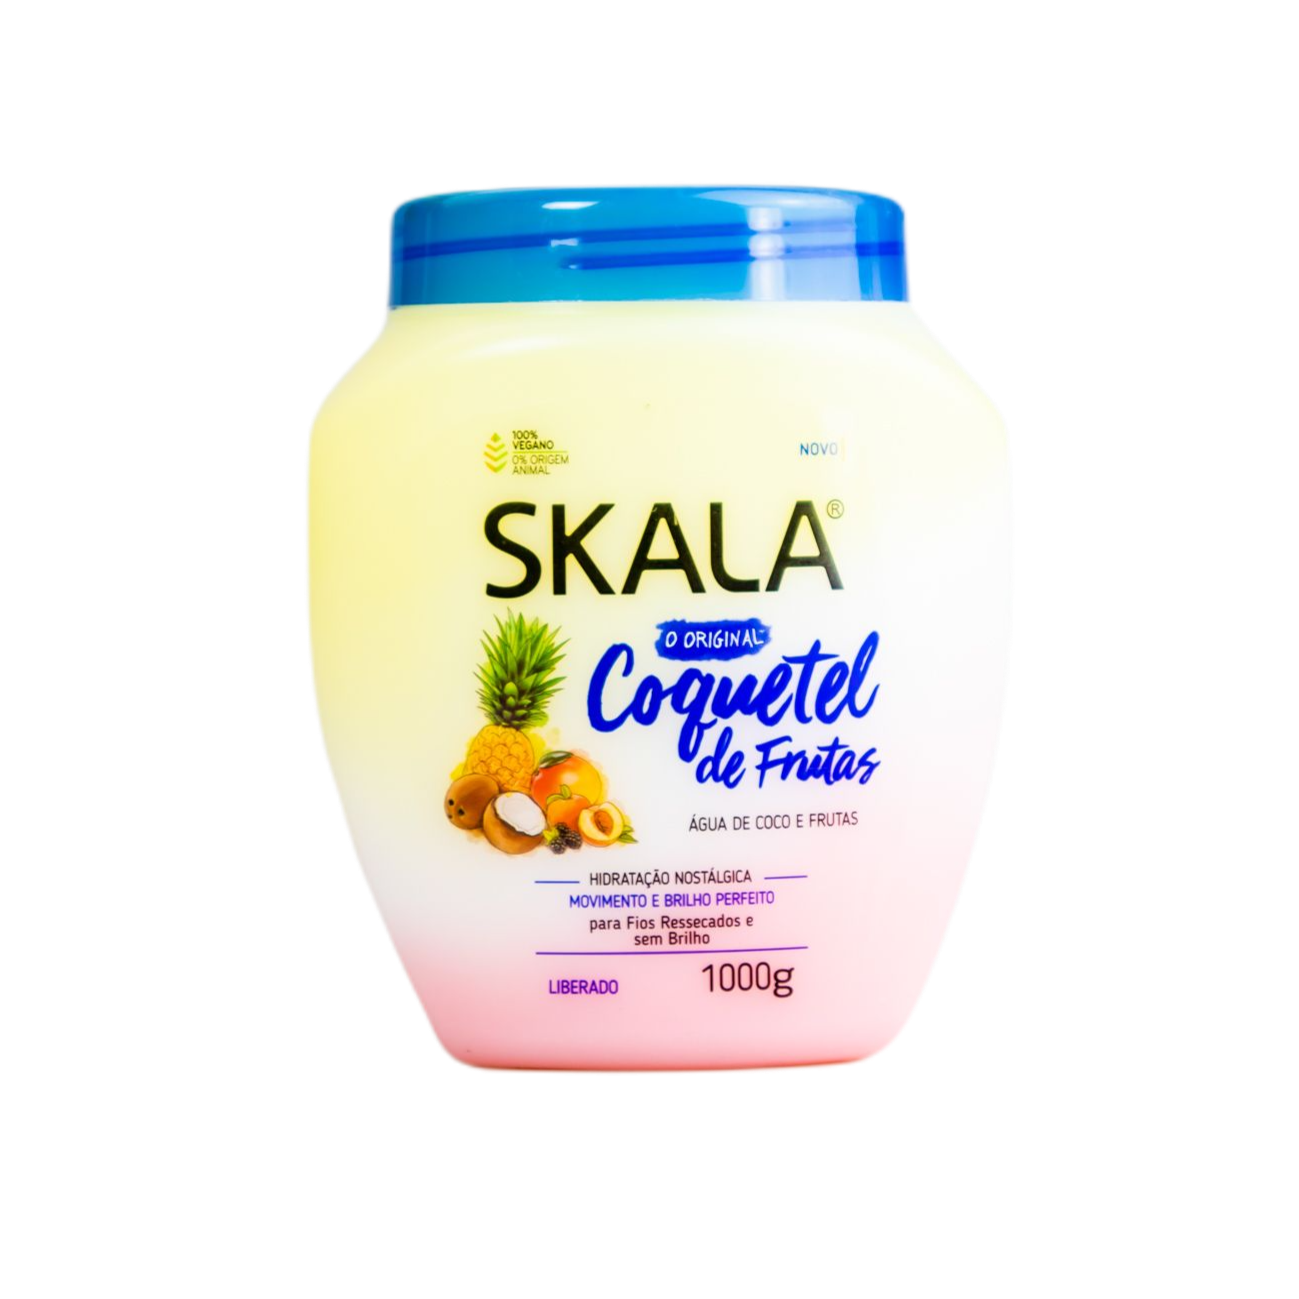  Skala - Brasil - Creme de Tratamento Café Verde e Ucuuba 1 Kg  - (Green Coffee and Ucuuba Treatment Cream Net 35.27 Oz) : Beauty &  Personal Care